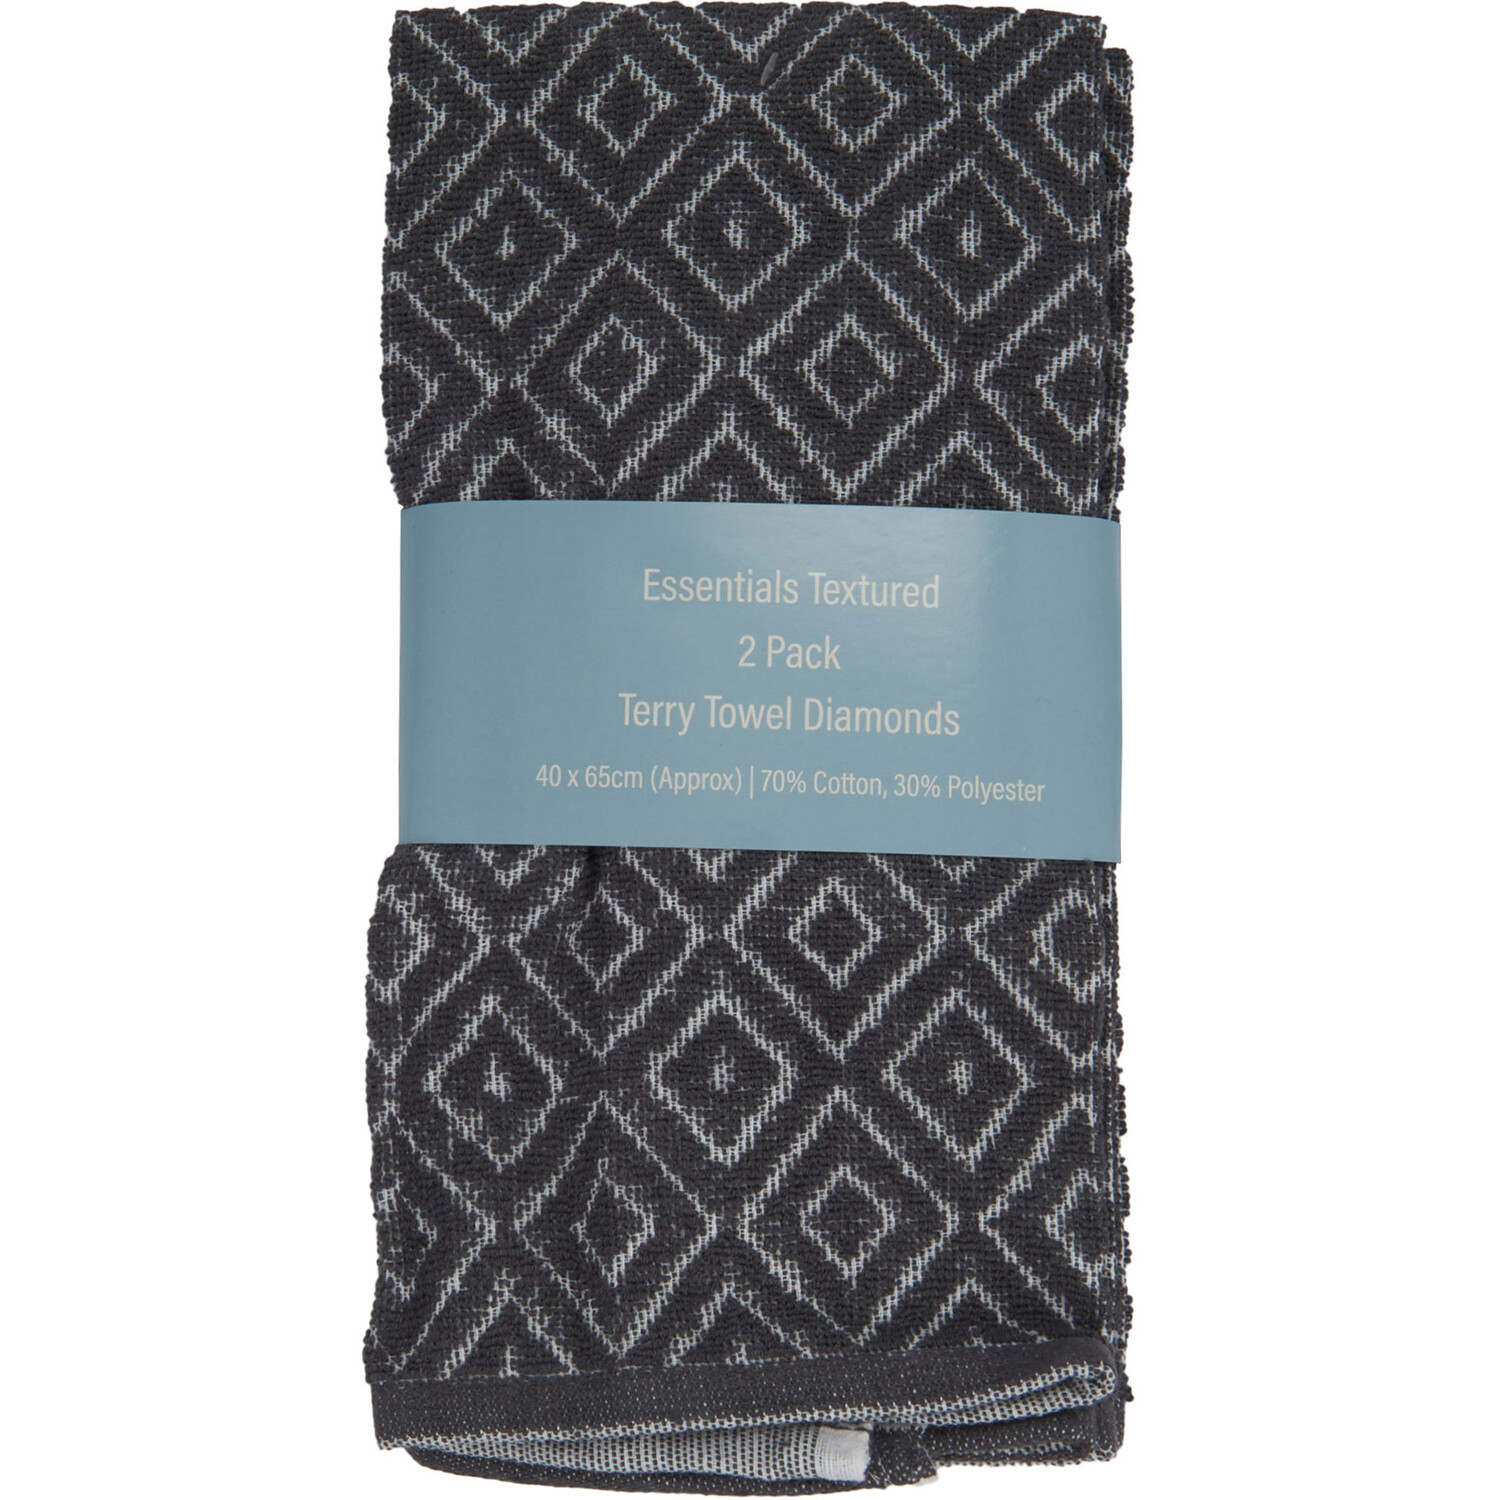 Essentials Polycotton Black Diamond Textured Terry Towel 2 Pack Image 1